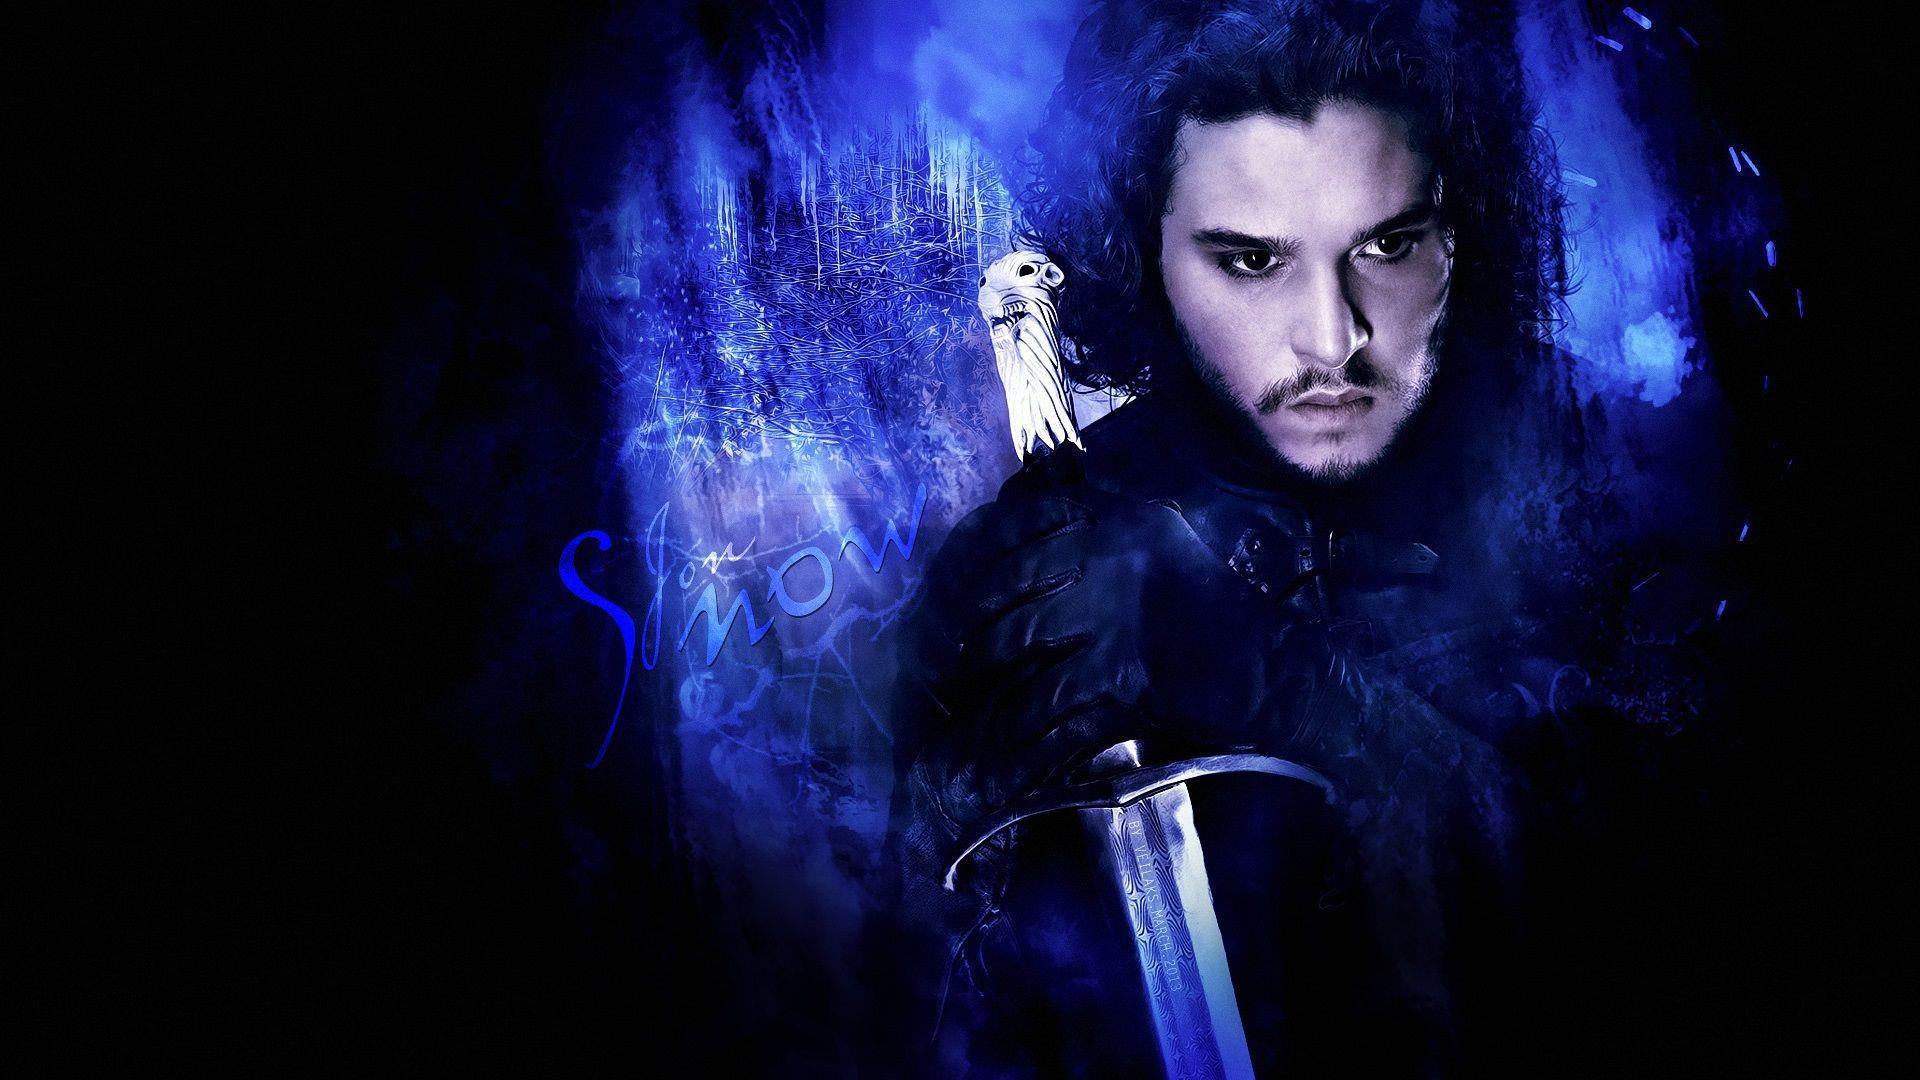 Jon Snow in Game of Thrones wallpaper